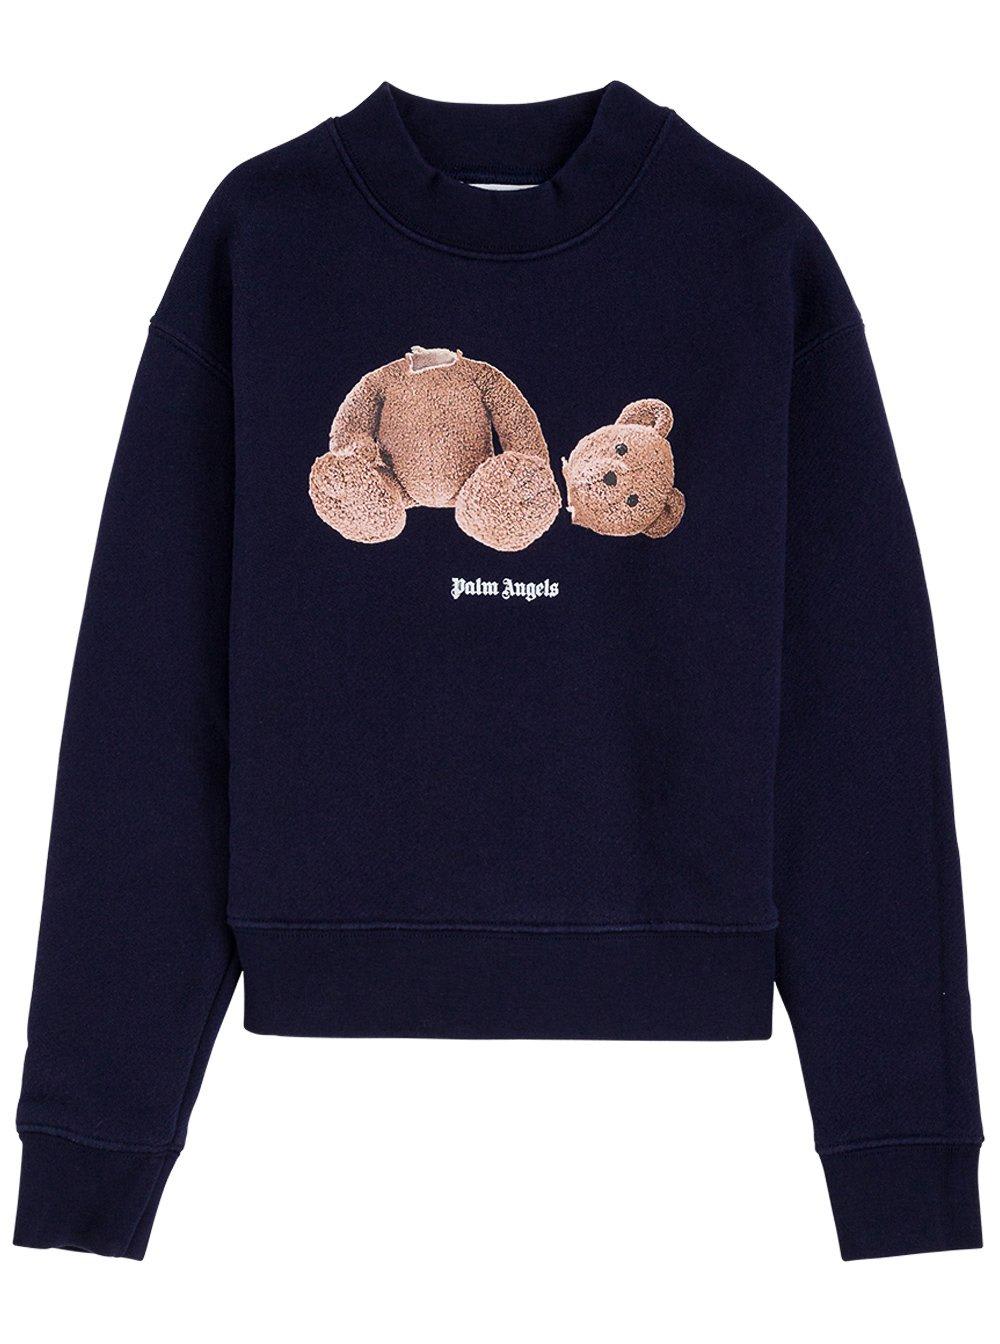 Palm Angels Teddy Bear Printed Sweatshirt